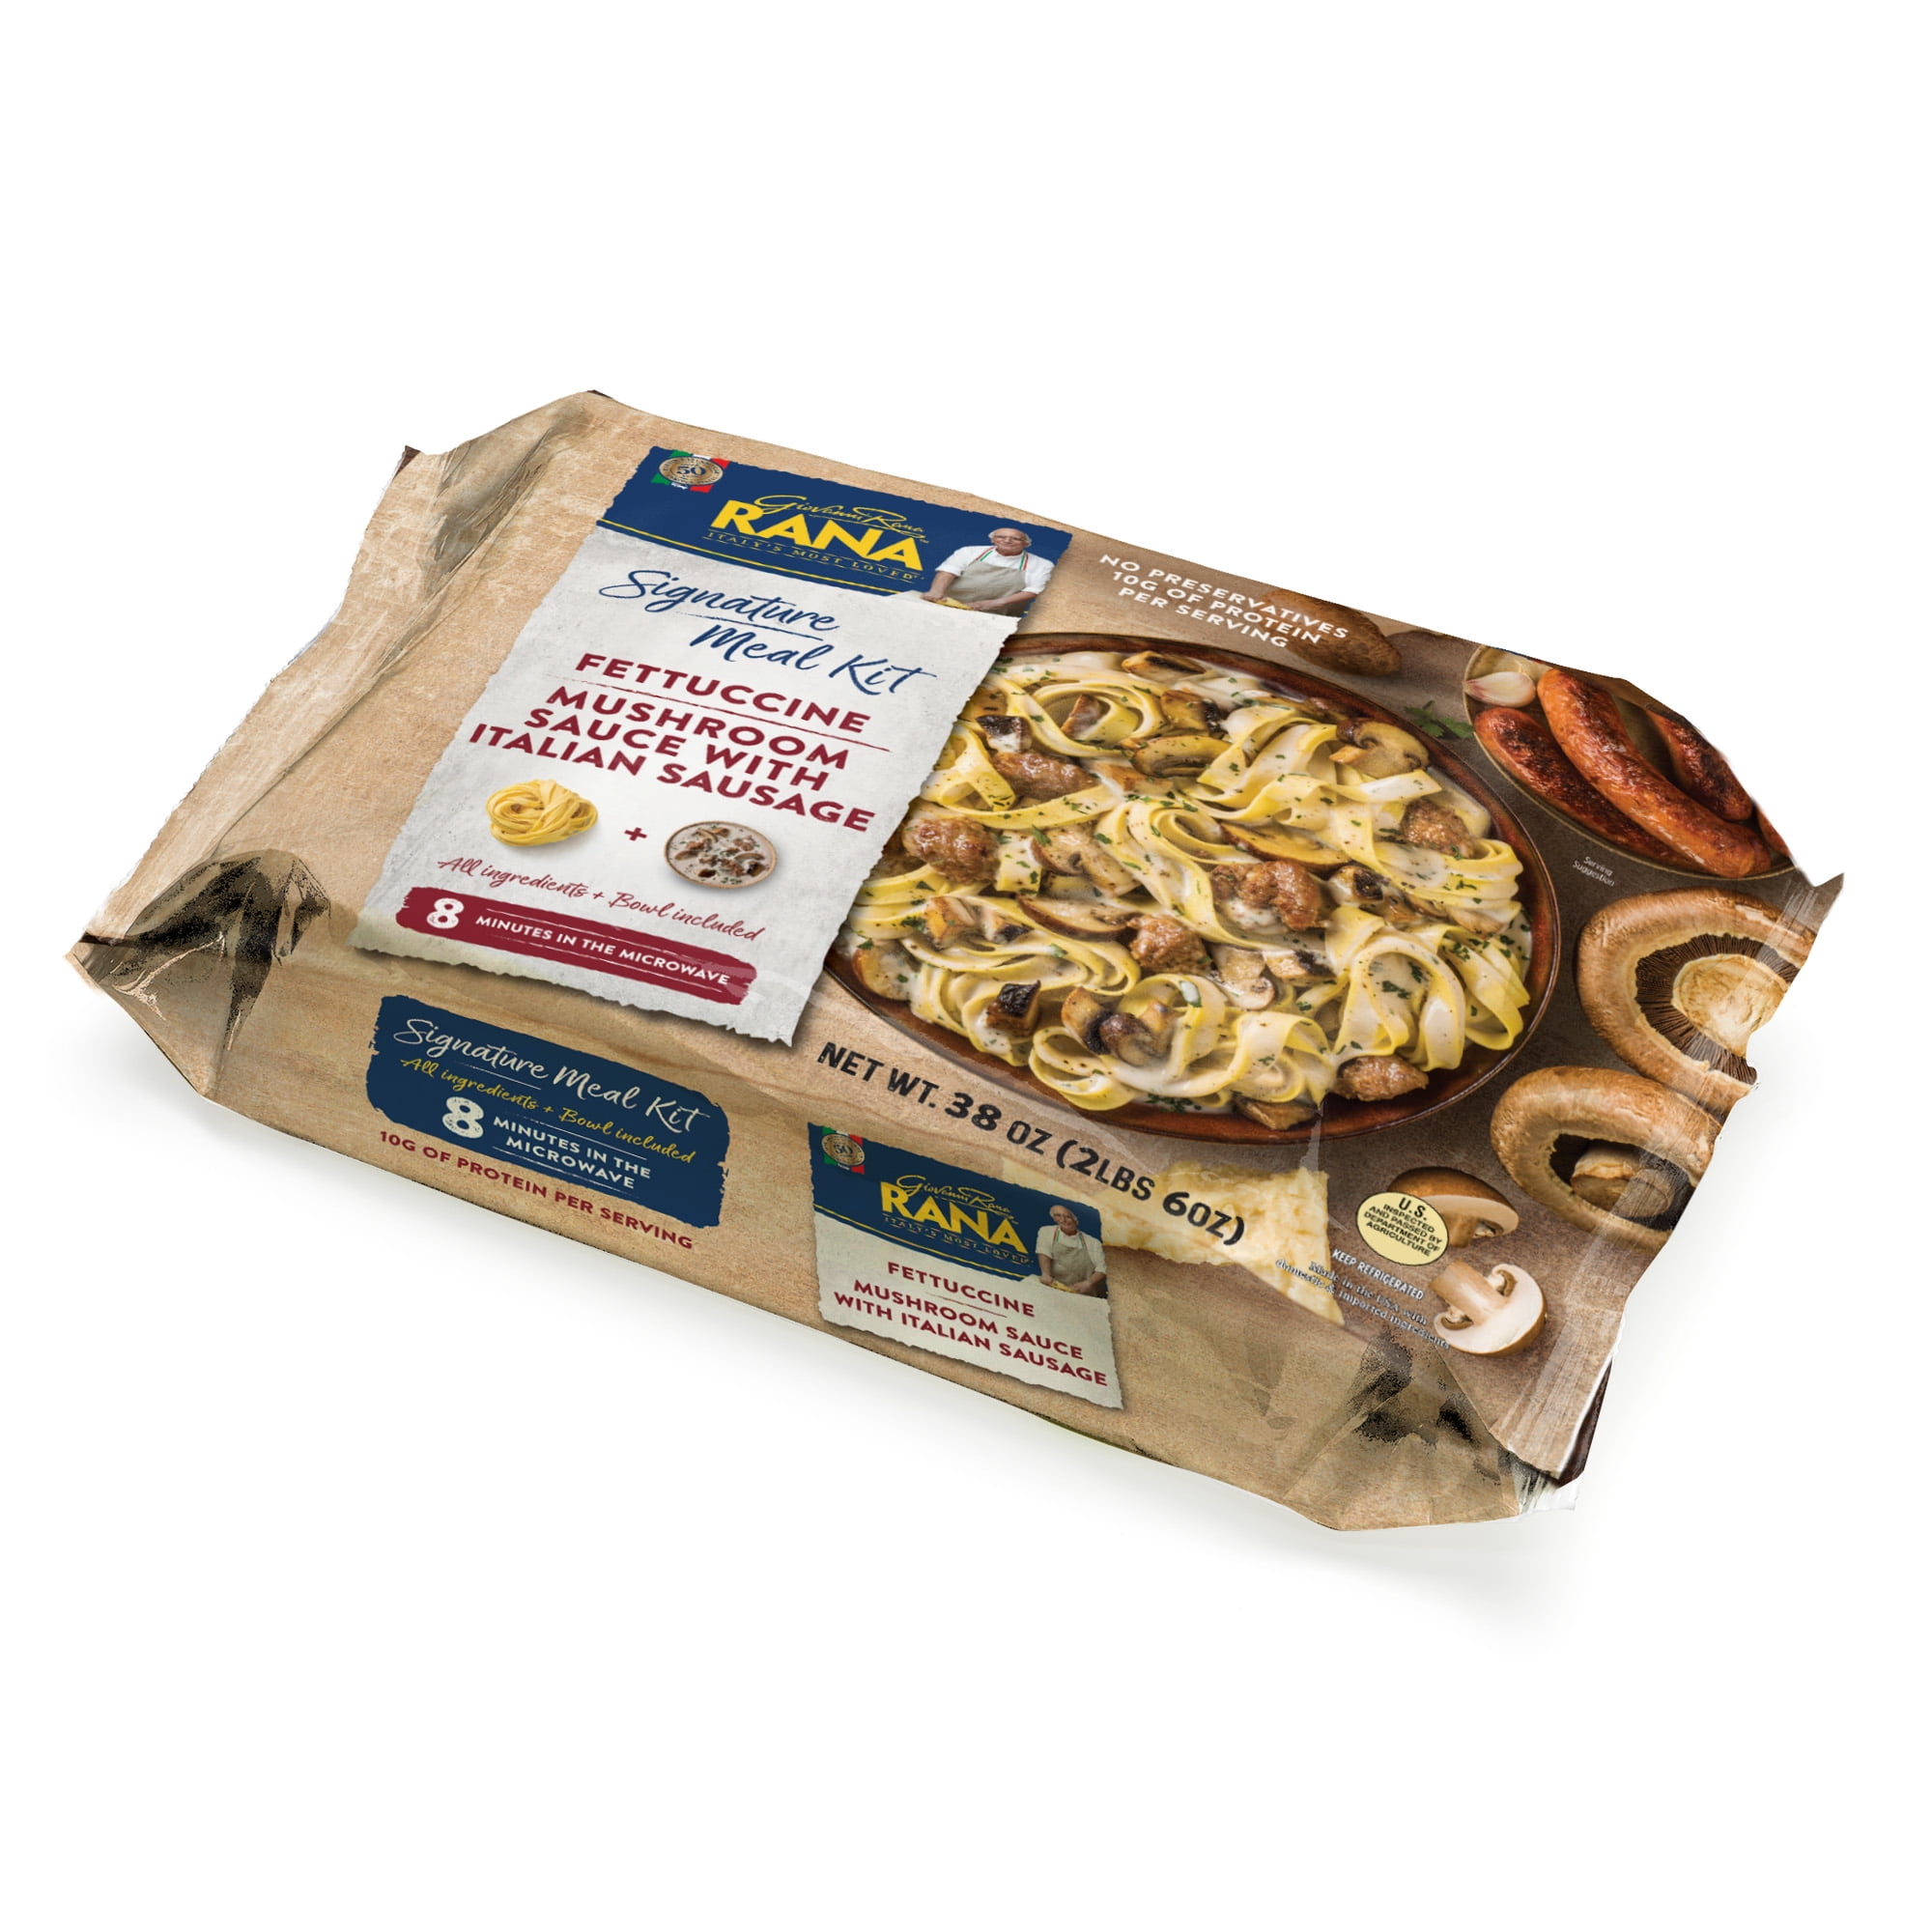 Giovanni Rana Homestyle Fettuccine Sausage & Mushroom Premium Meal Kit Tray  (Family Size, 38oz)